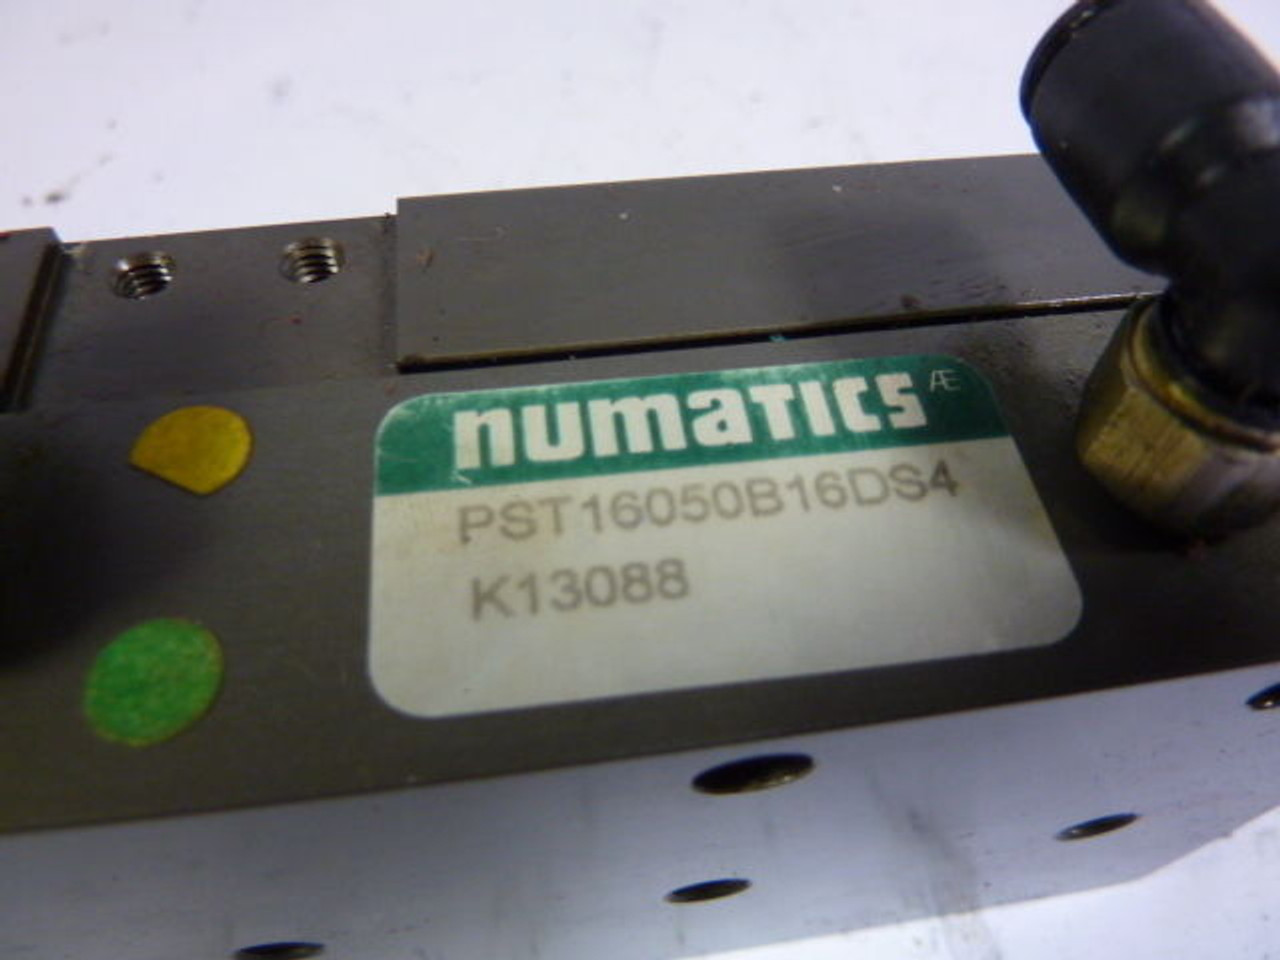 Numatics PST16050B16DS4 Linear Slide Cylinder USED